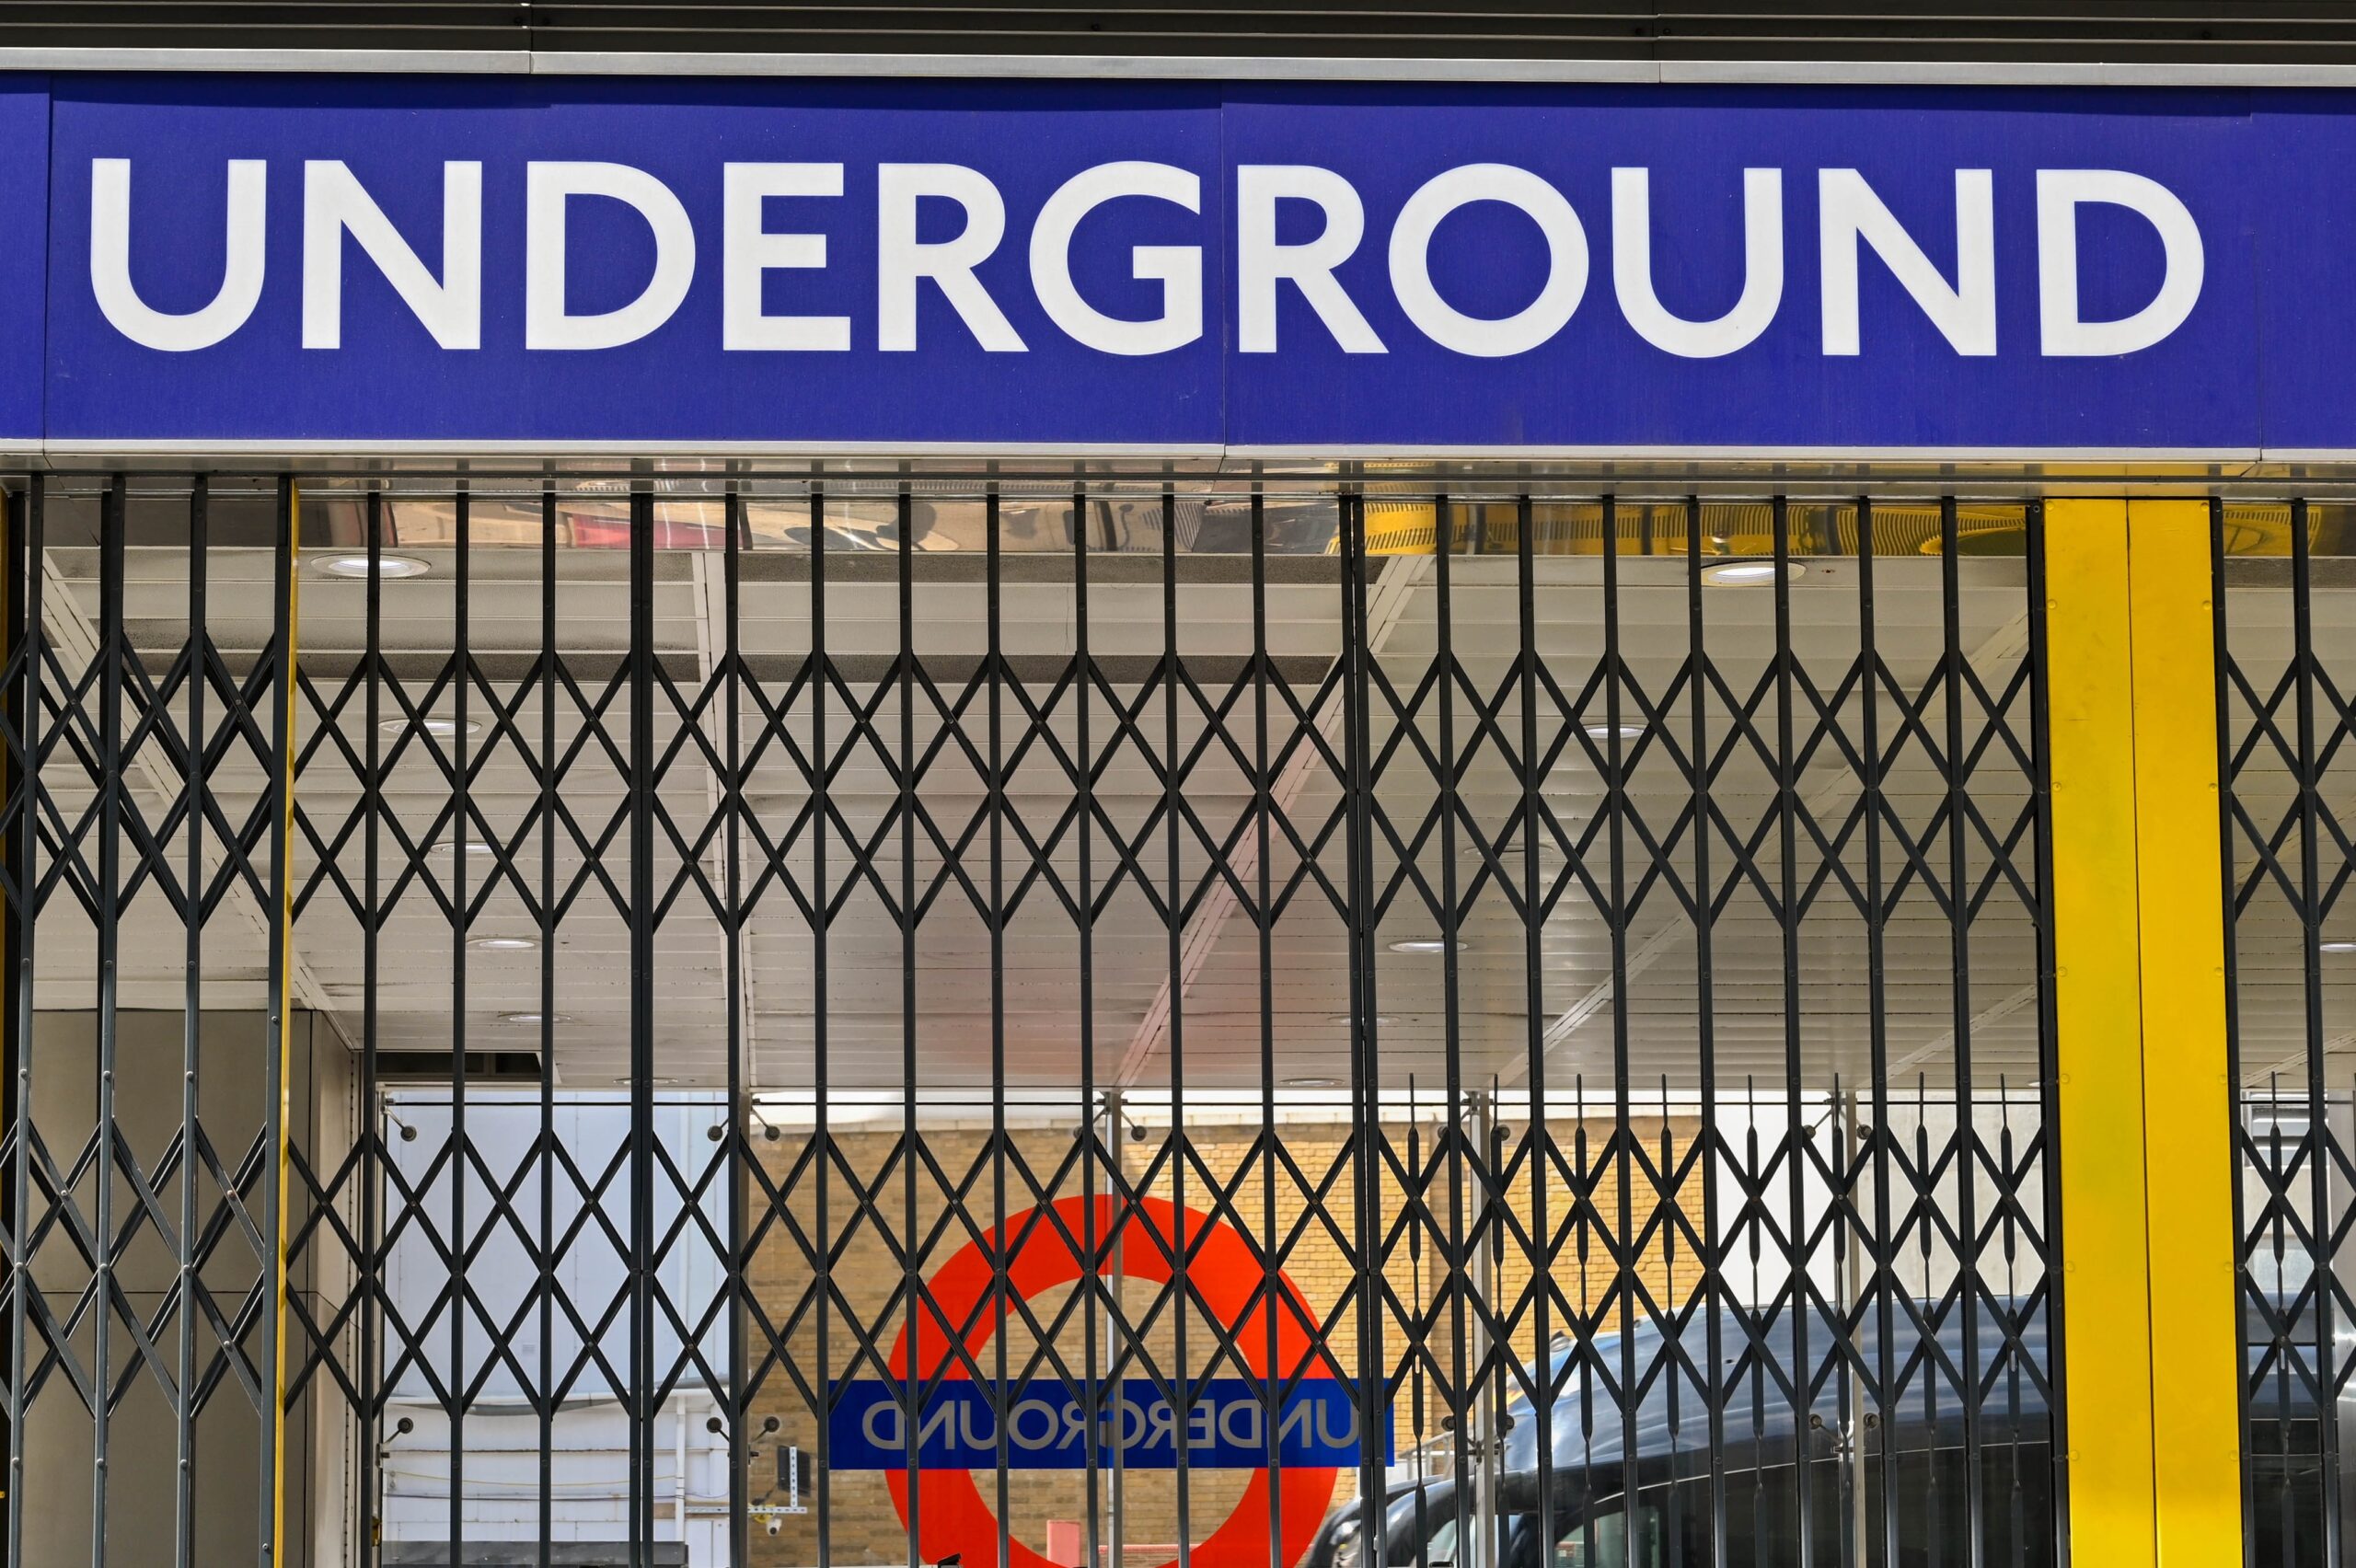 London Underground station closed due to strikes